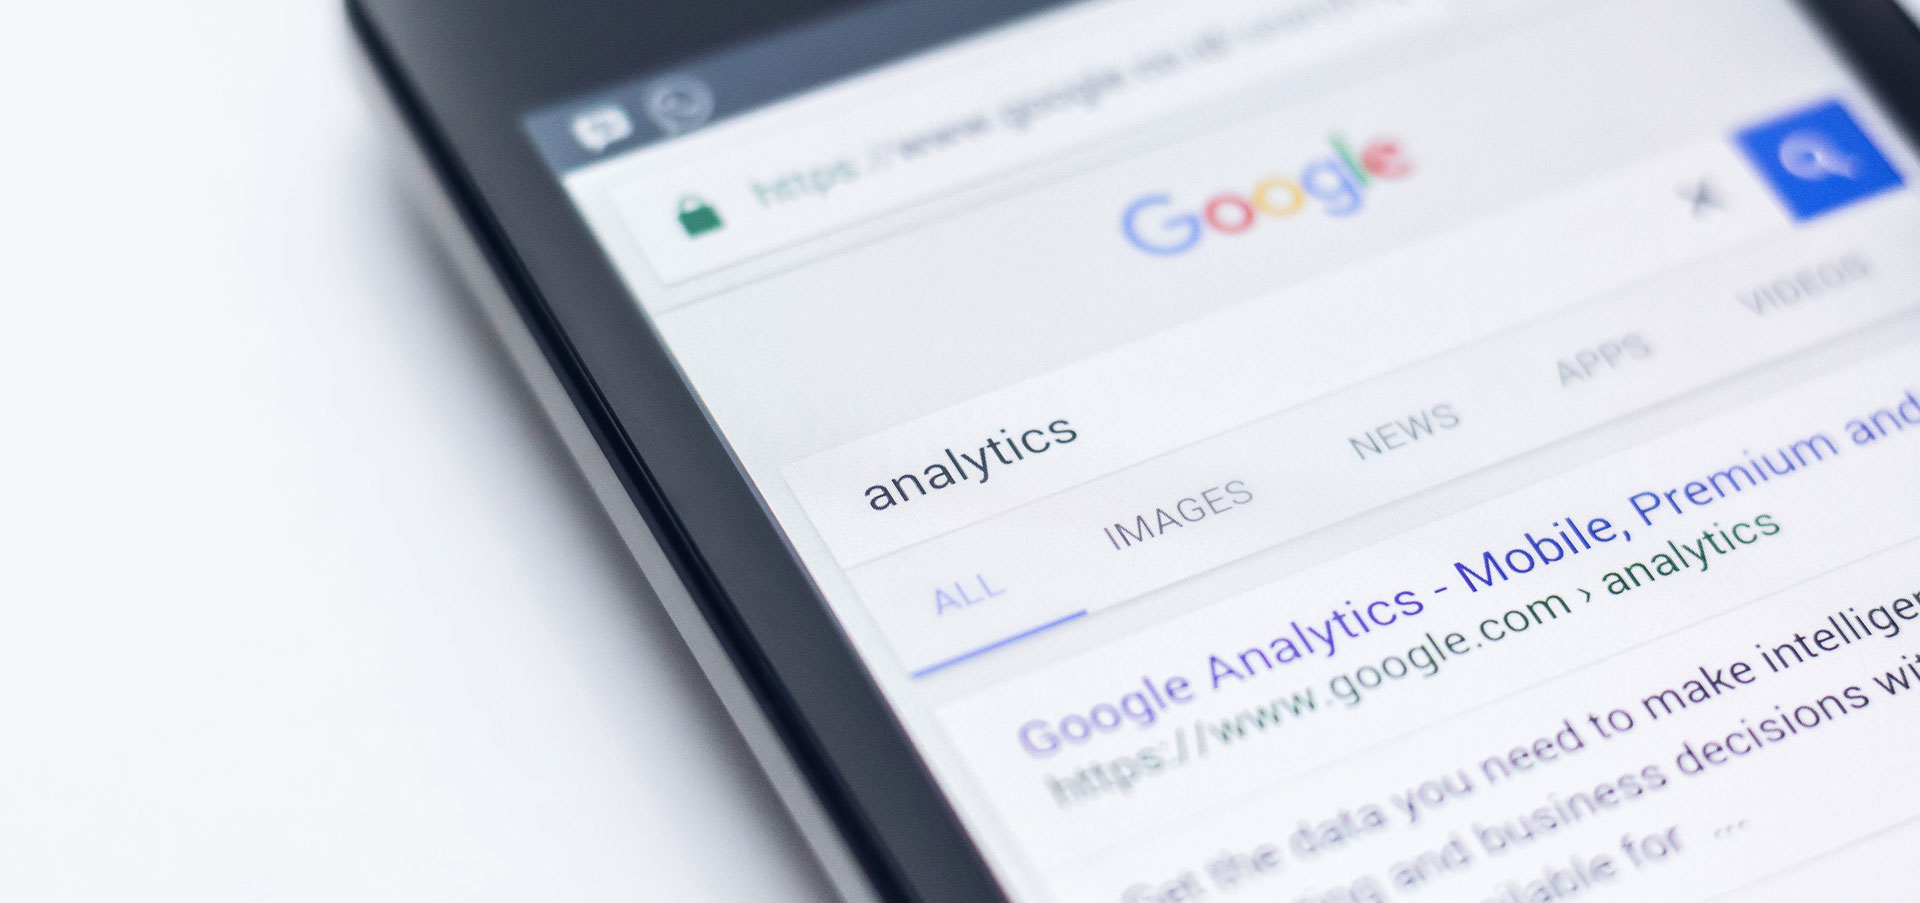 Google Analytics is part of a website audit